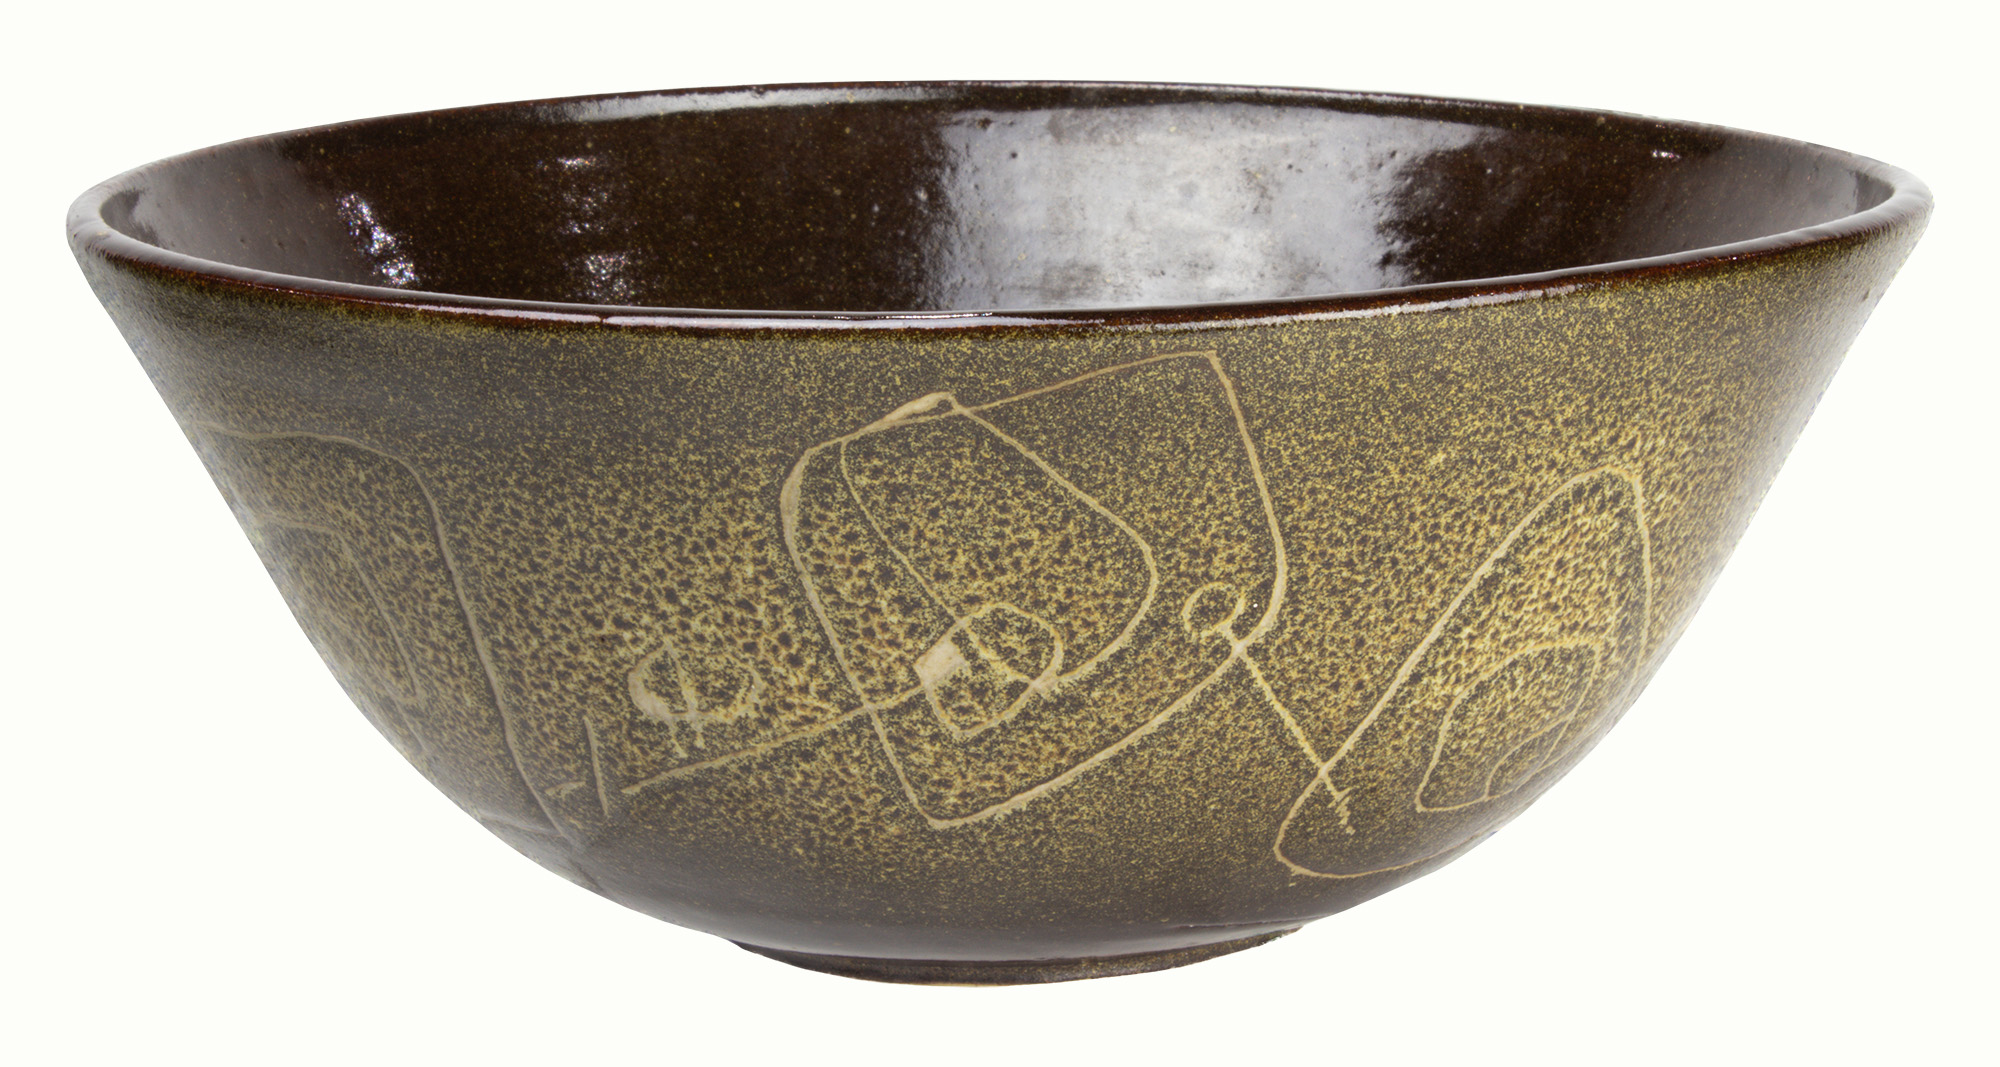 Toshiko Takaezu glazed stoneware bowl